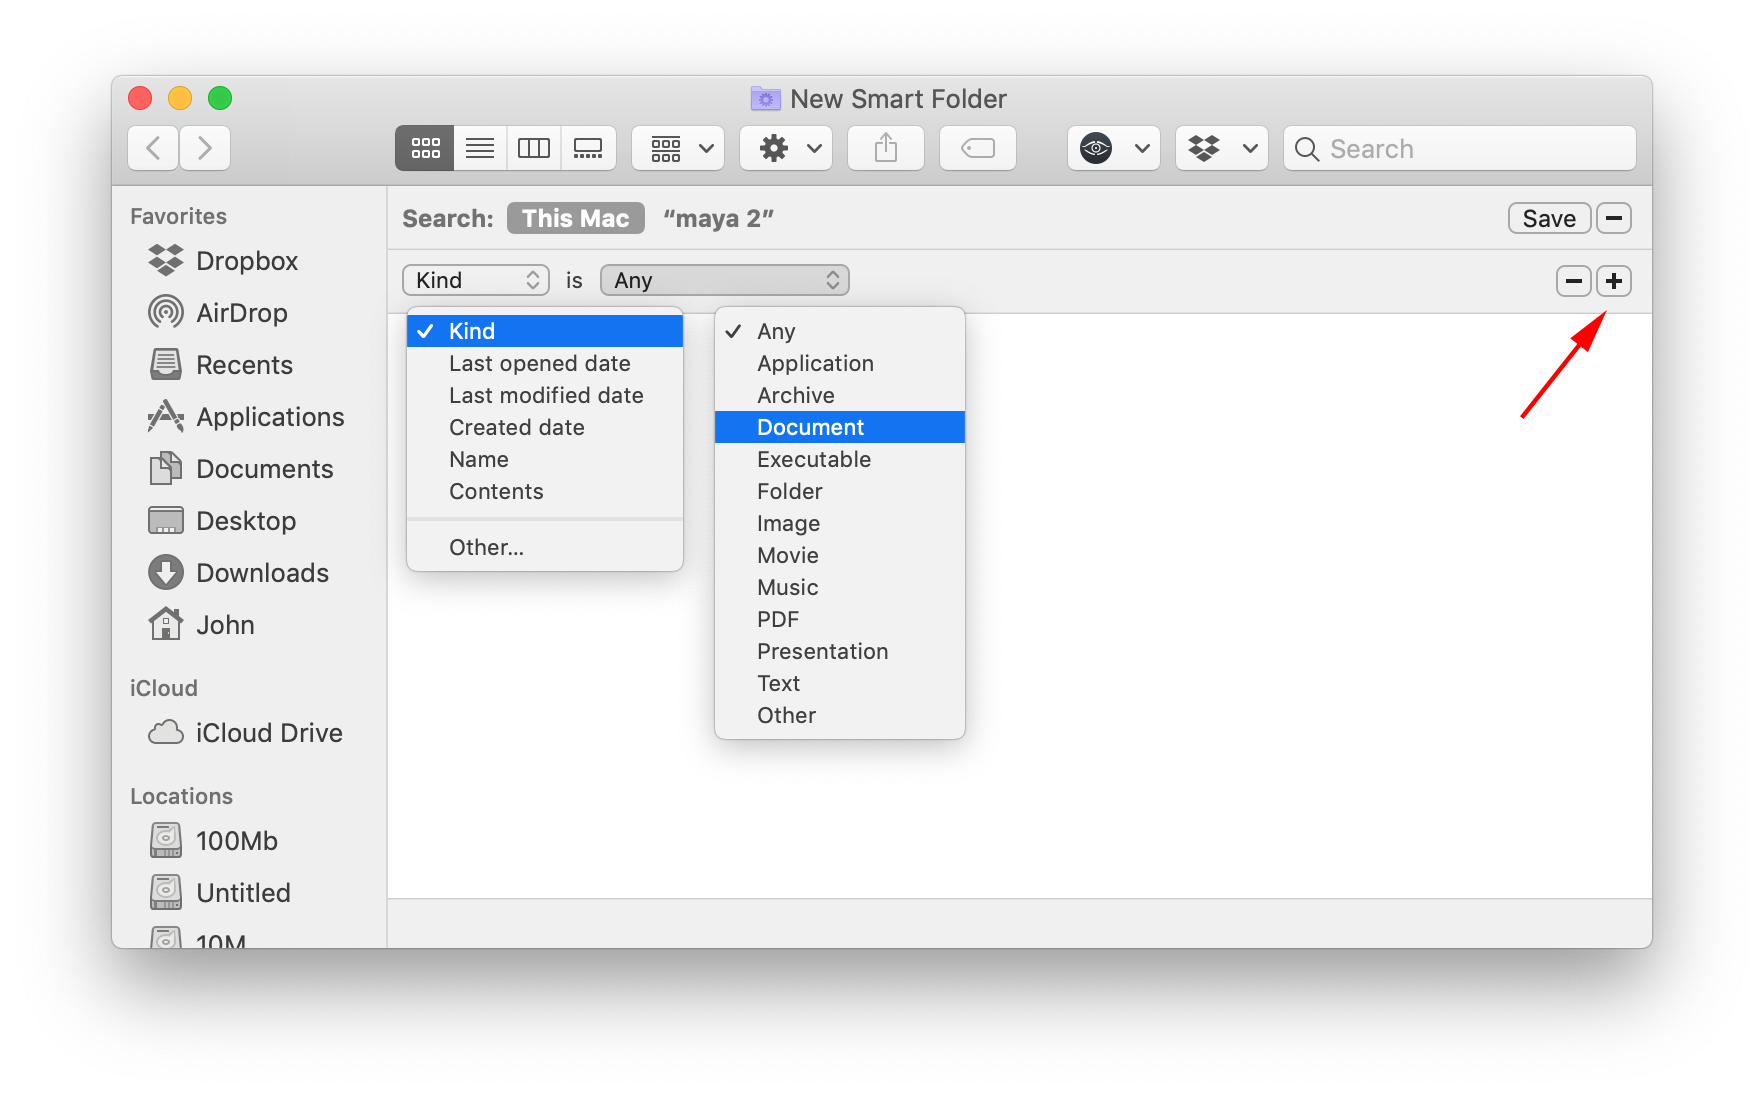 New Smart Folder options window